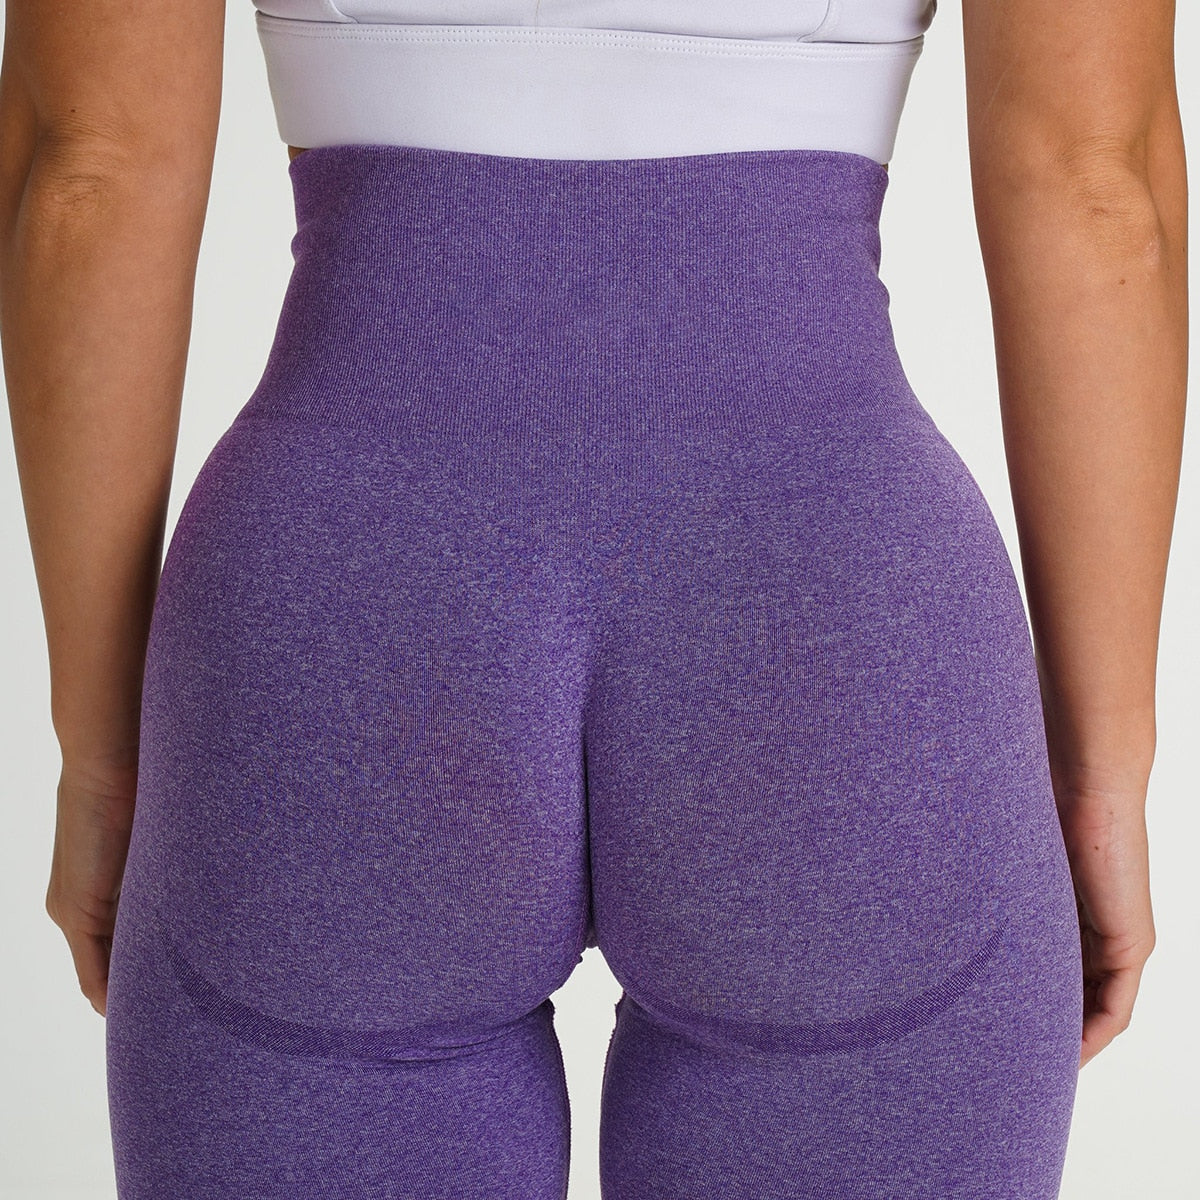 Seamless Leggings Women Sport Slim ShortsTights Fitness High Waist Women Clothing Gym Workout Pants Female Pants Purple Shorts